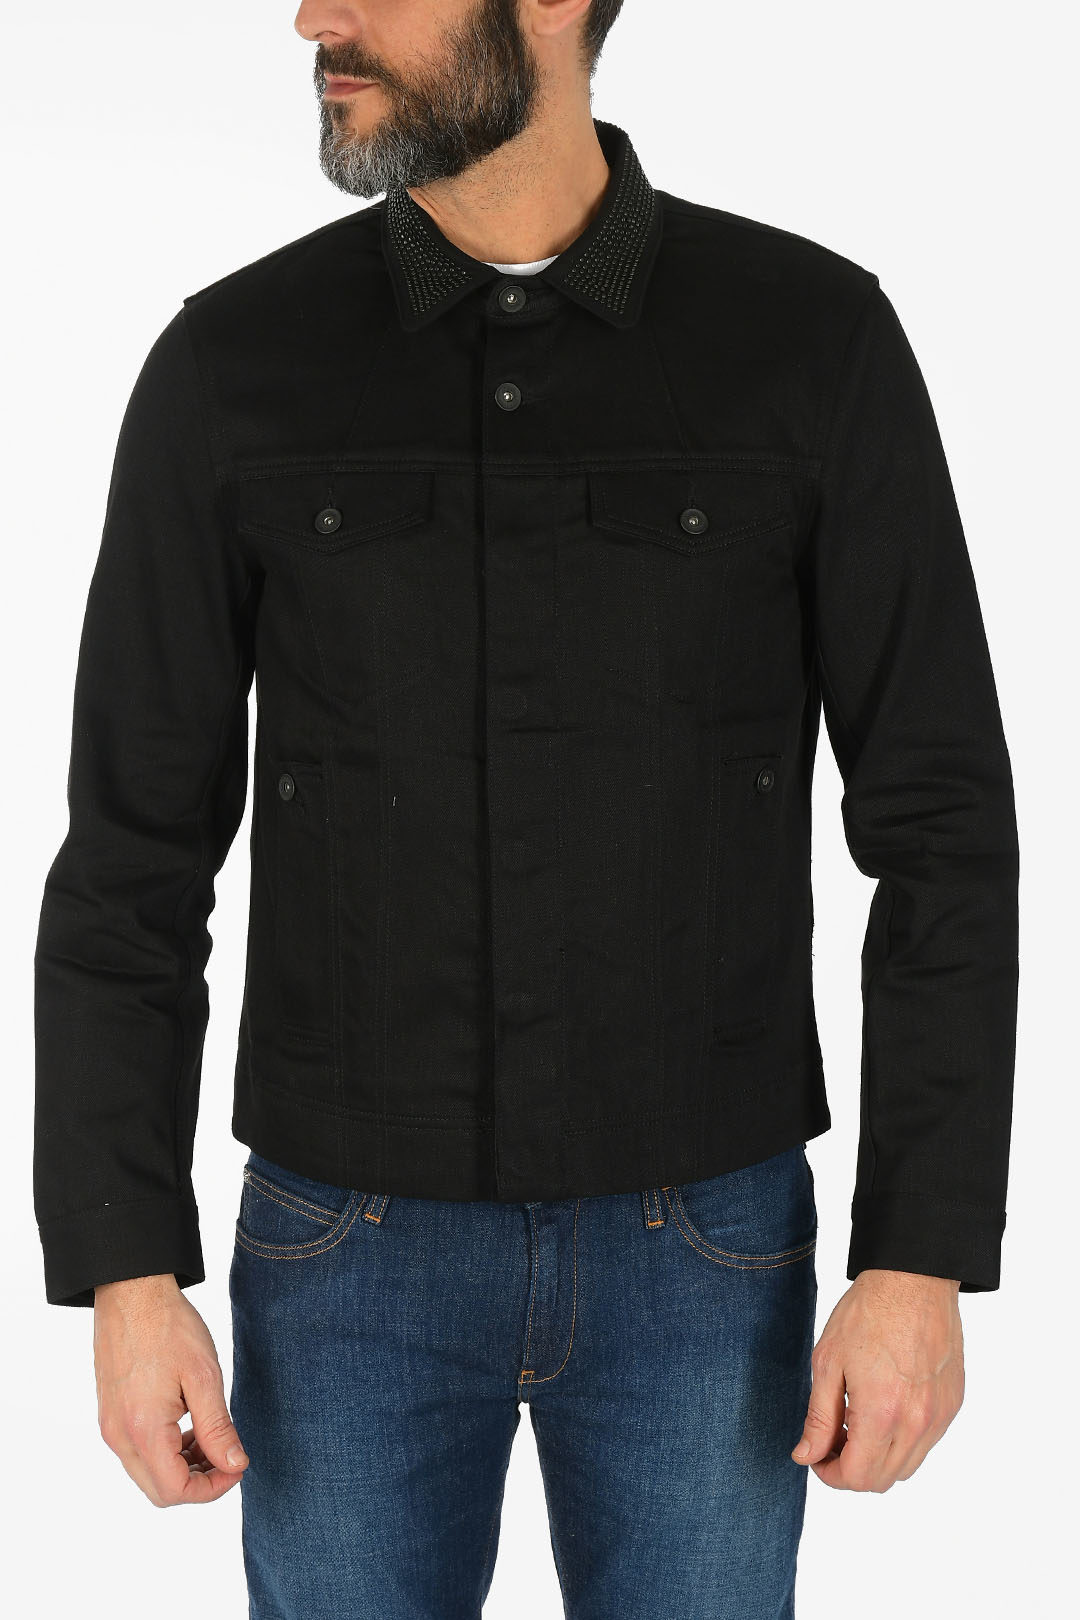 Armani ARMANI EXCHANGE Denim Jacket With Studs Collar men - Glamood Outlet